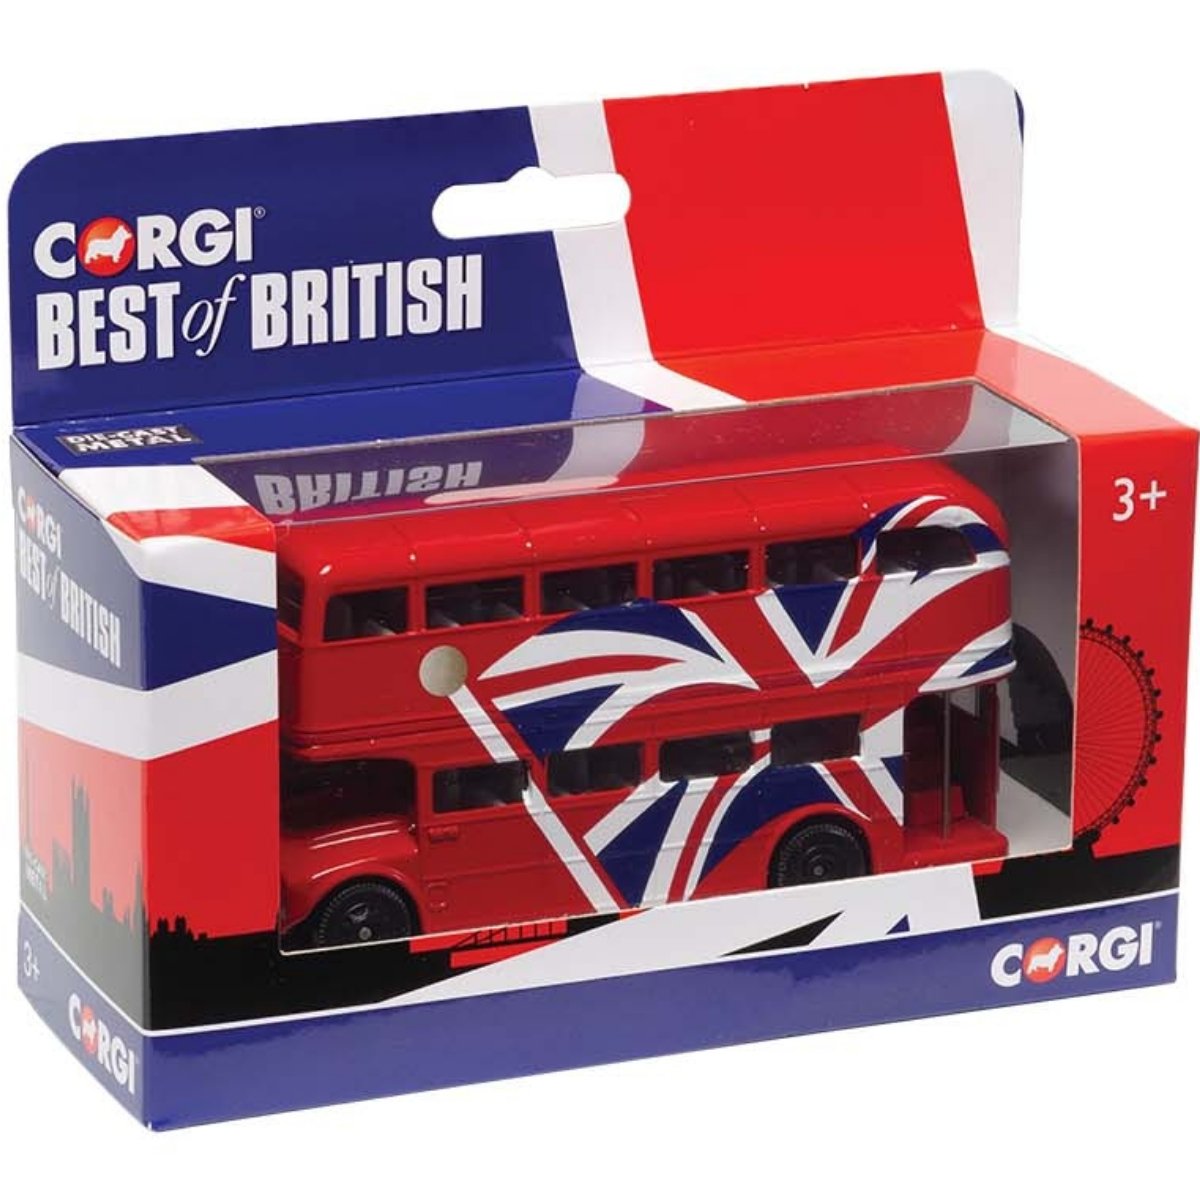 Corgi GS82336 Best of British London Bus - Phillips Hobbies